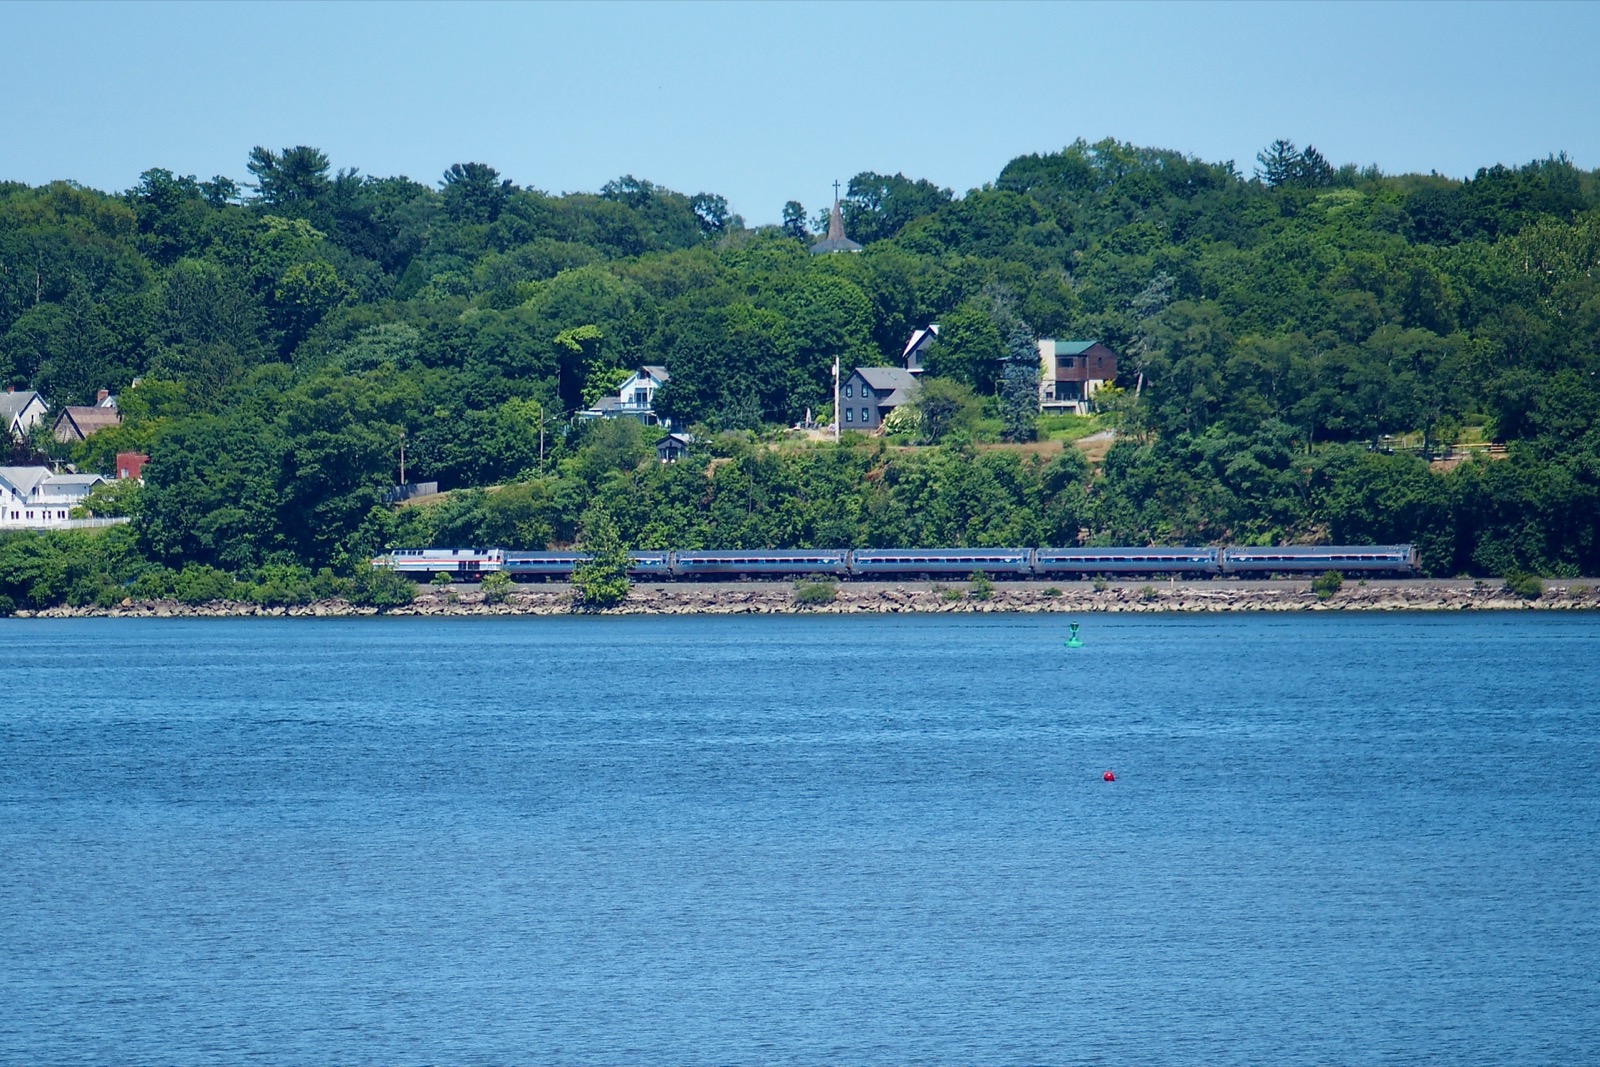 Photo of passenger train along the Hudson River